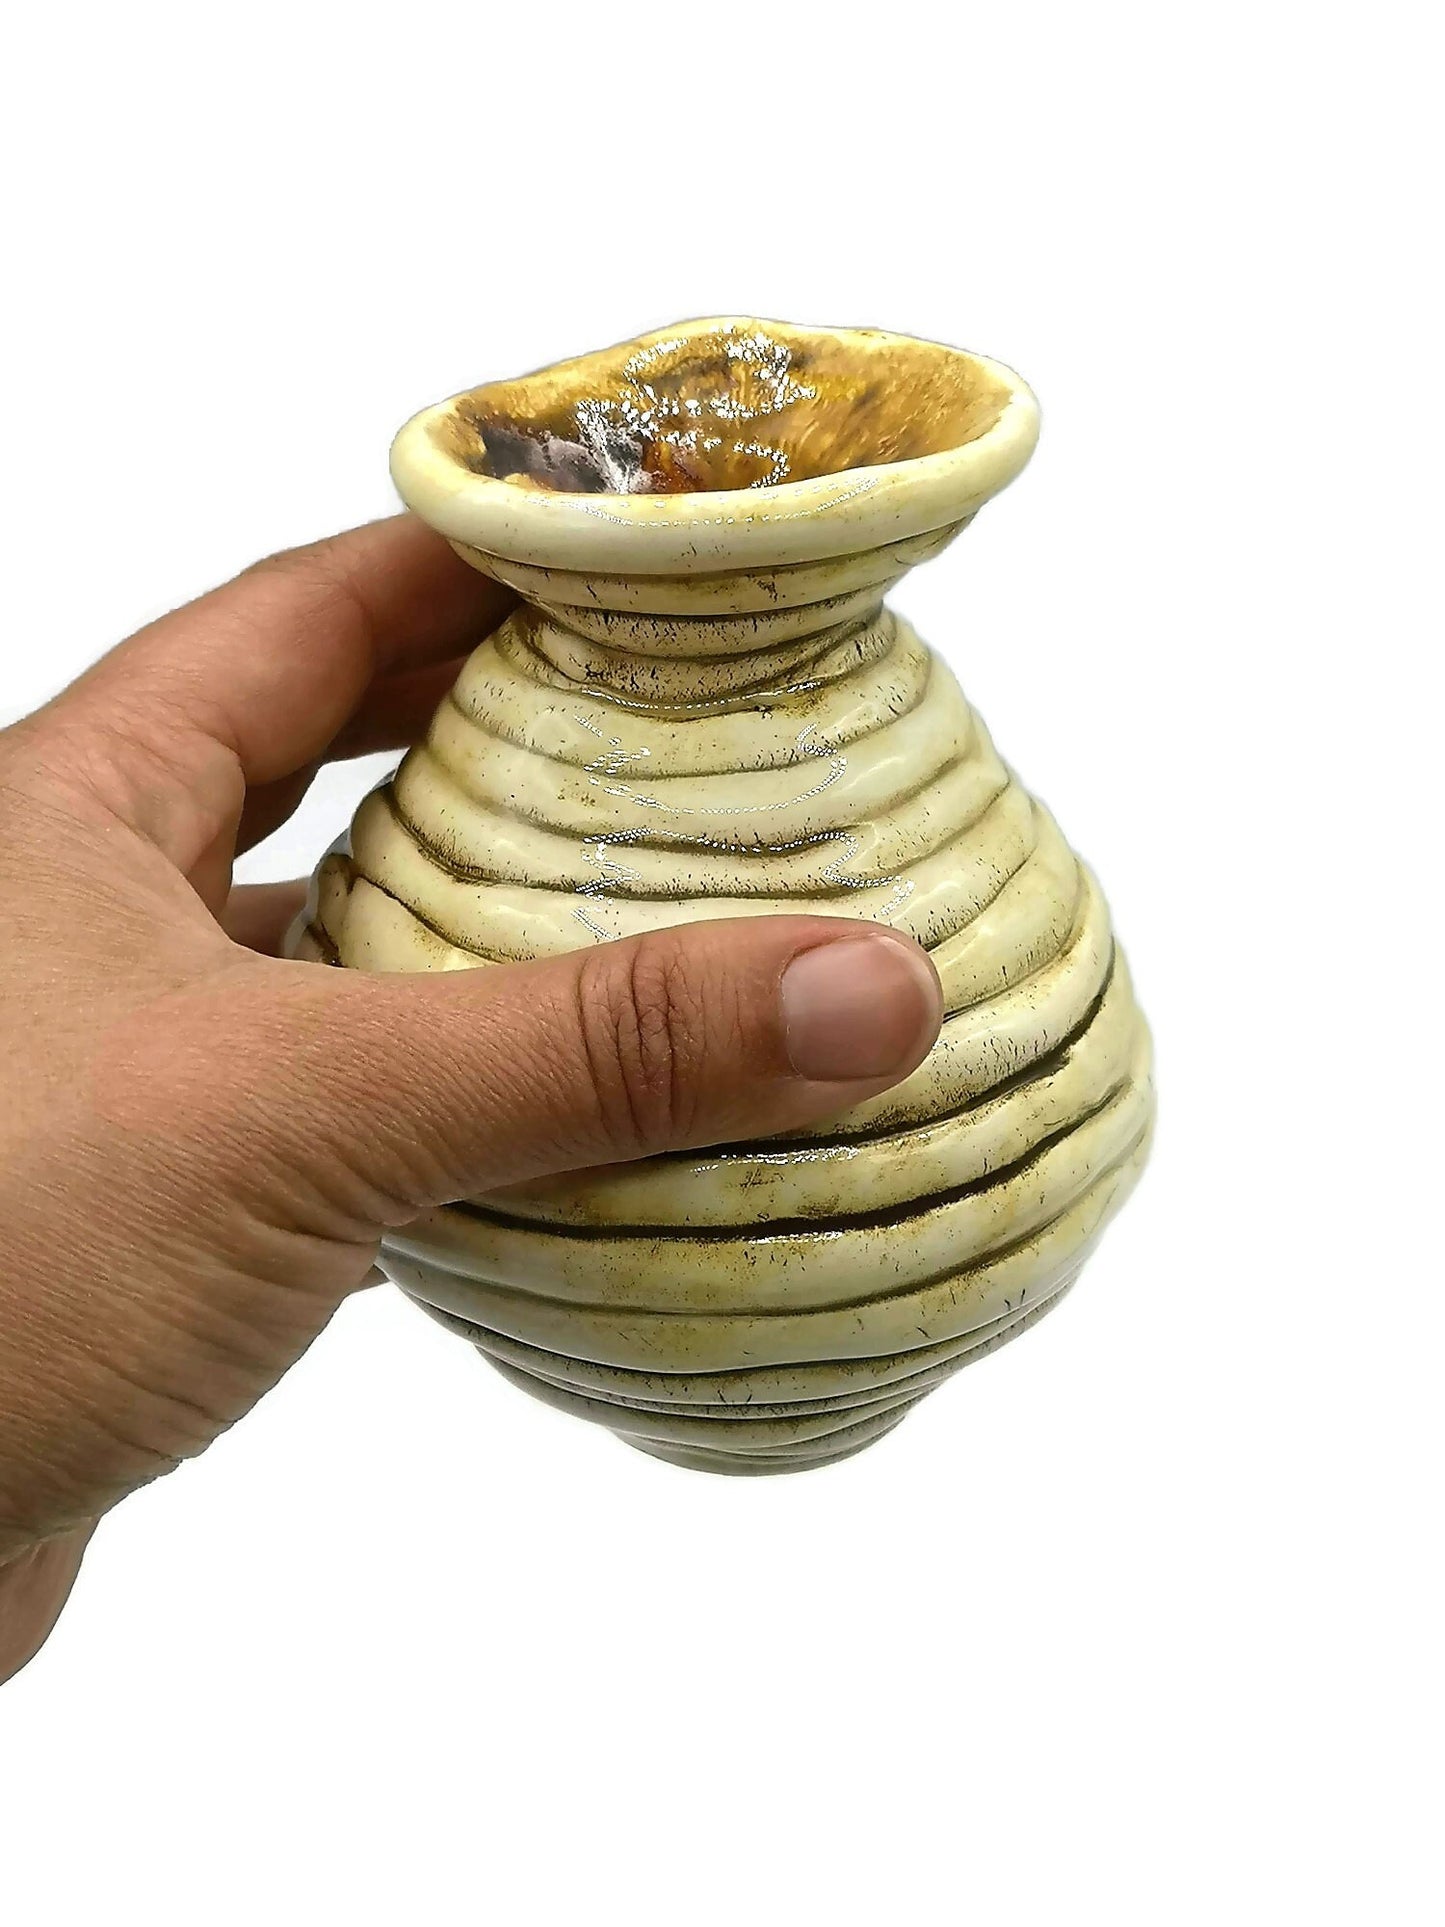 Handmade ceramic Vase, Textured Pottery Vase with Irregular Organic Shape, Abstract Sculpture Ceramic Vessel, Home Decor Gift Idea - Ceramica Ana Rafael